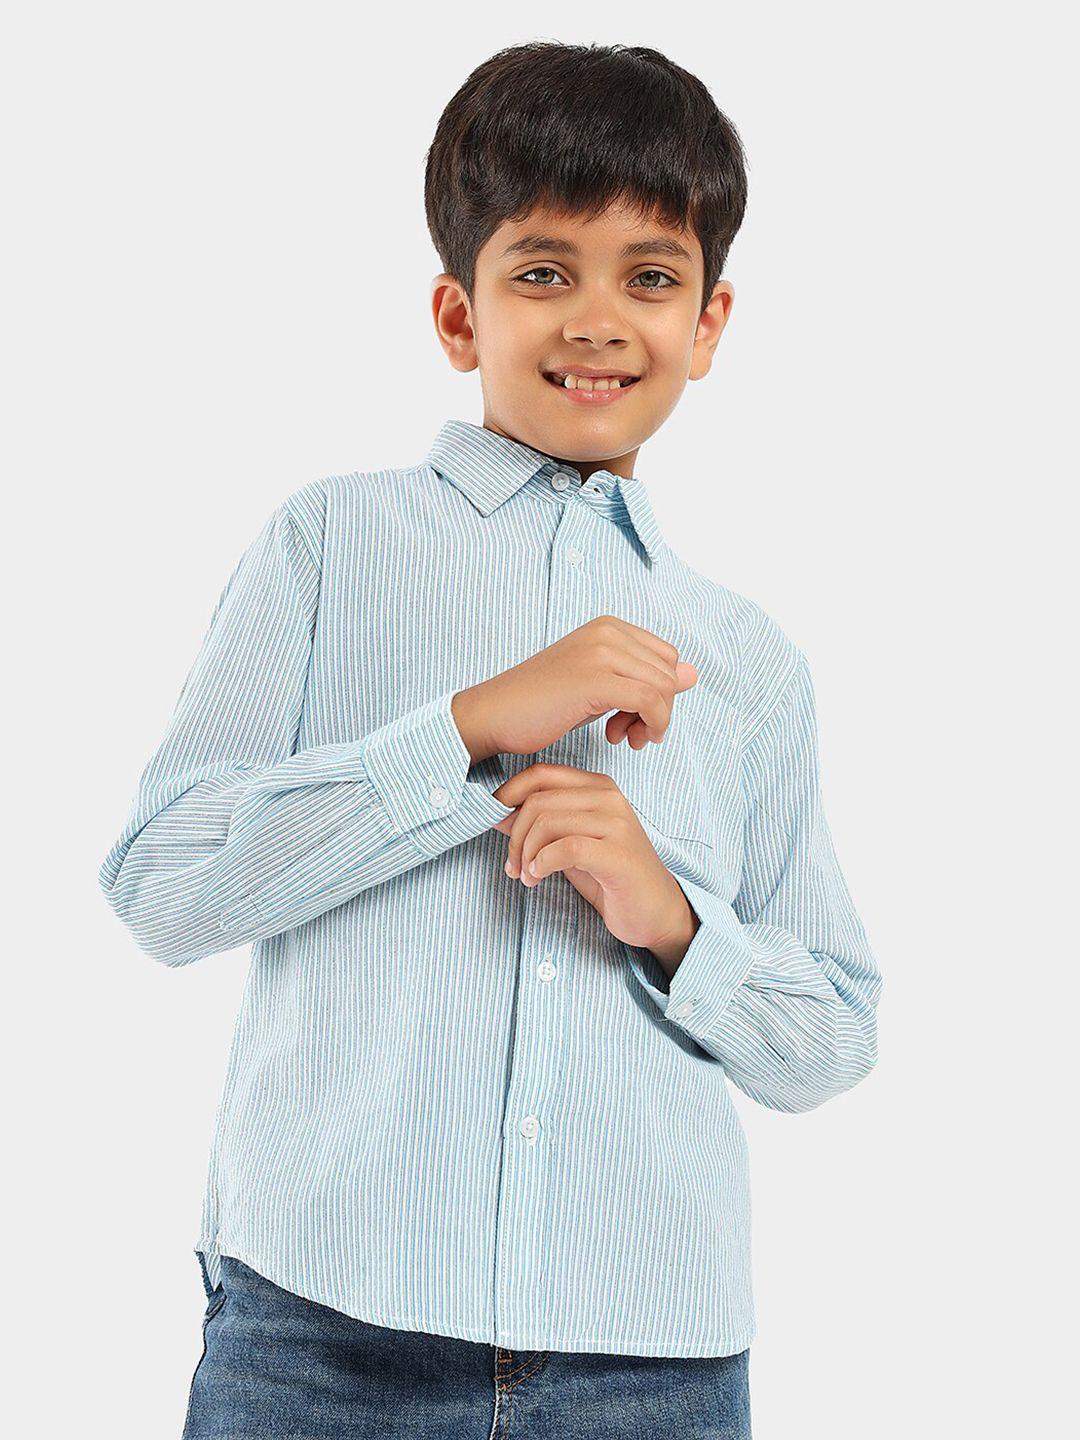 lilpicks boys multicoloured smart opaque striped casual shirt